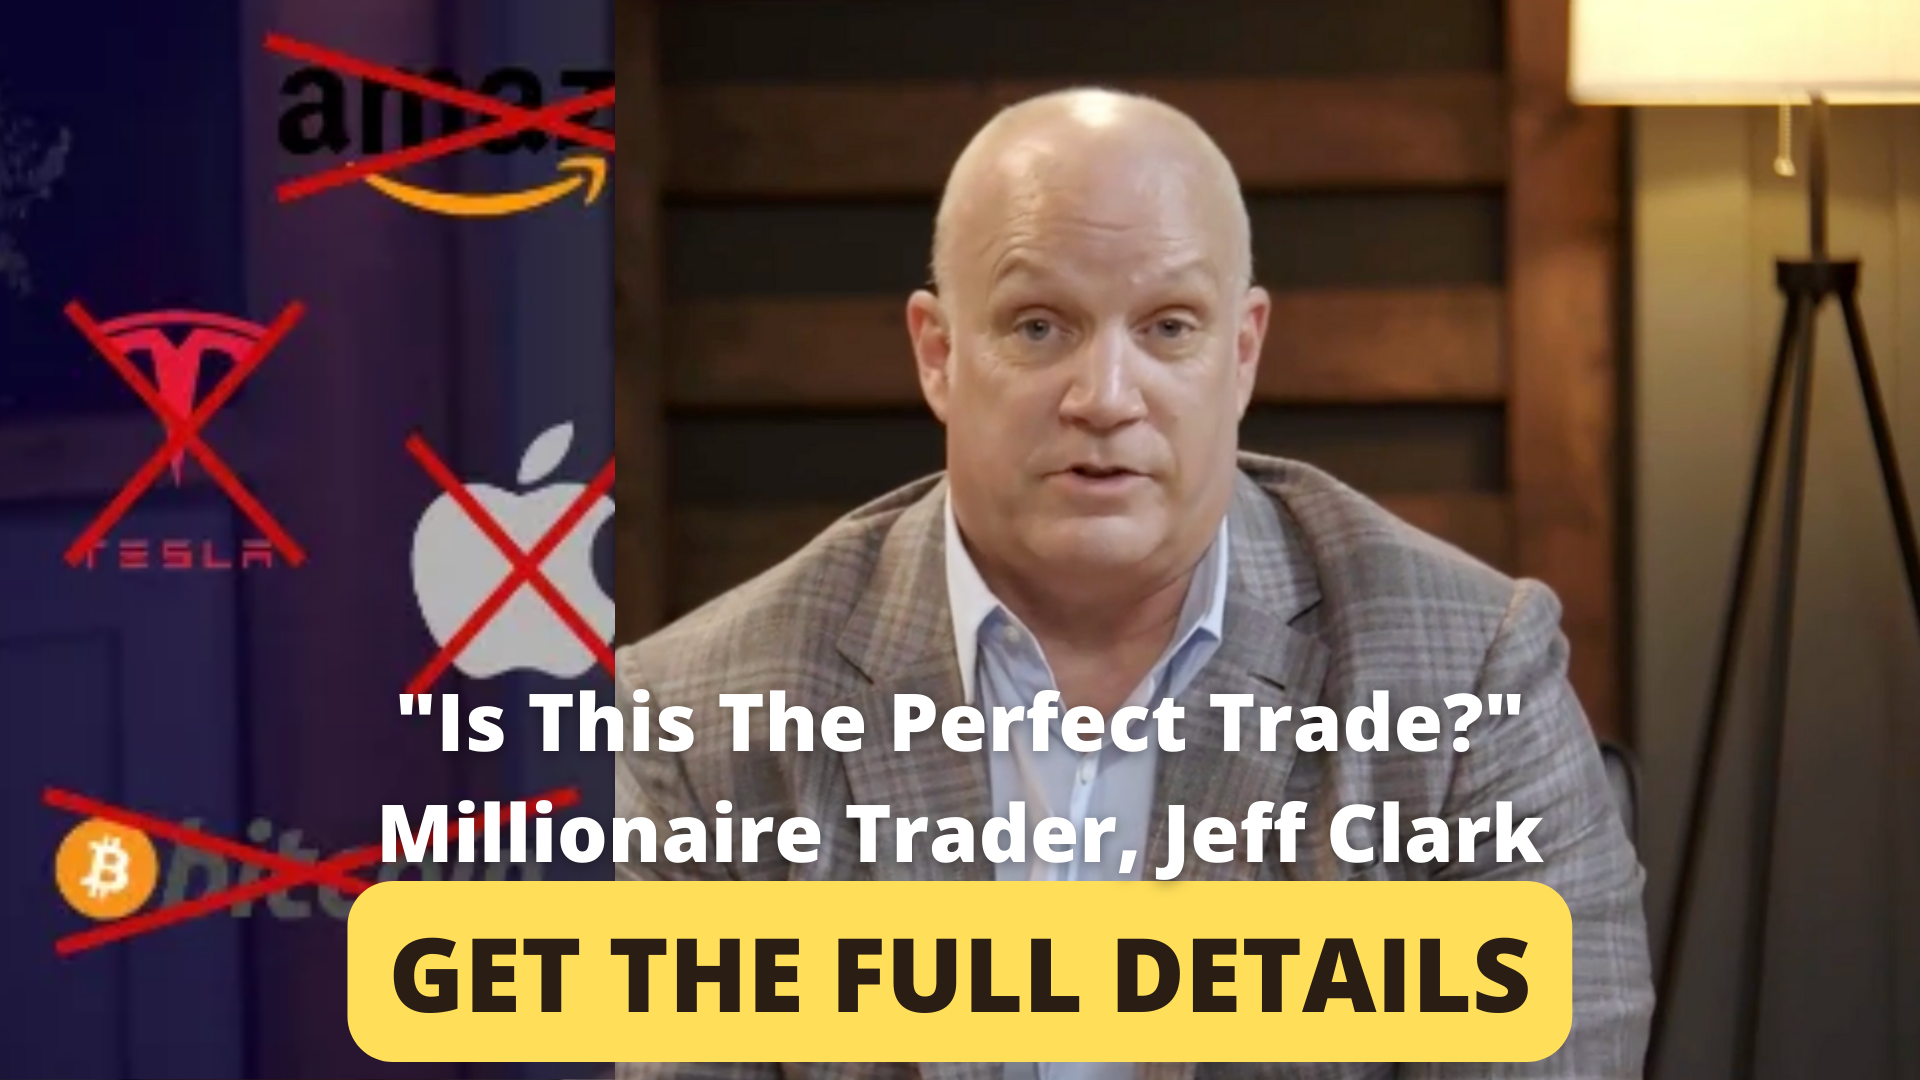 jeff clark millionaire trader